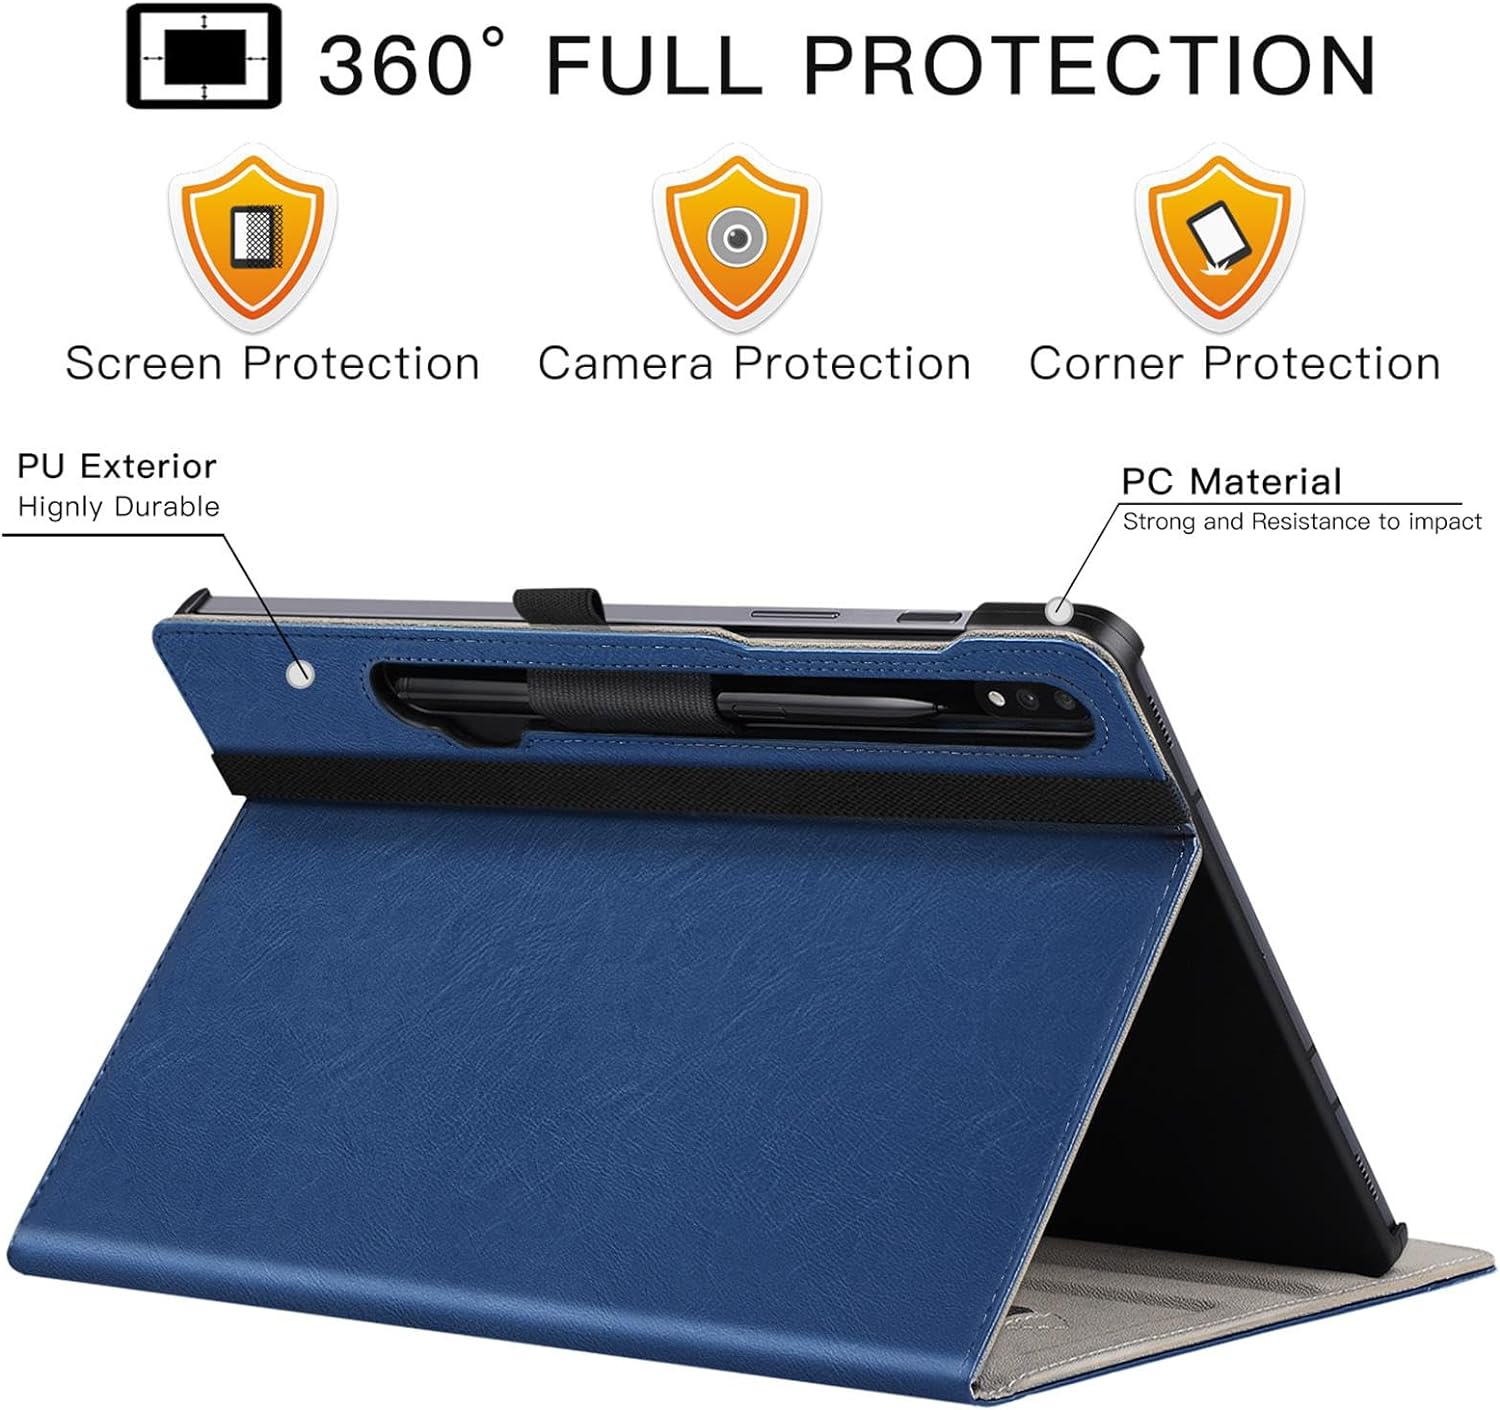 Samsung Galaxy Tab S9 Plus/ S9 FE Plus 5G 12.4 Inch Tablet Case 2023, Blue